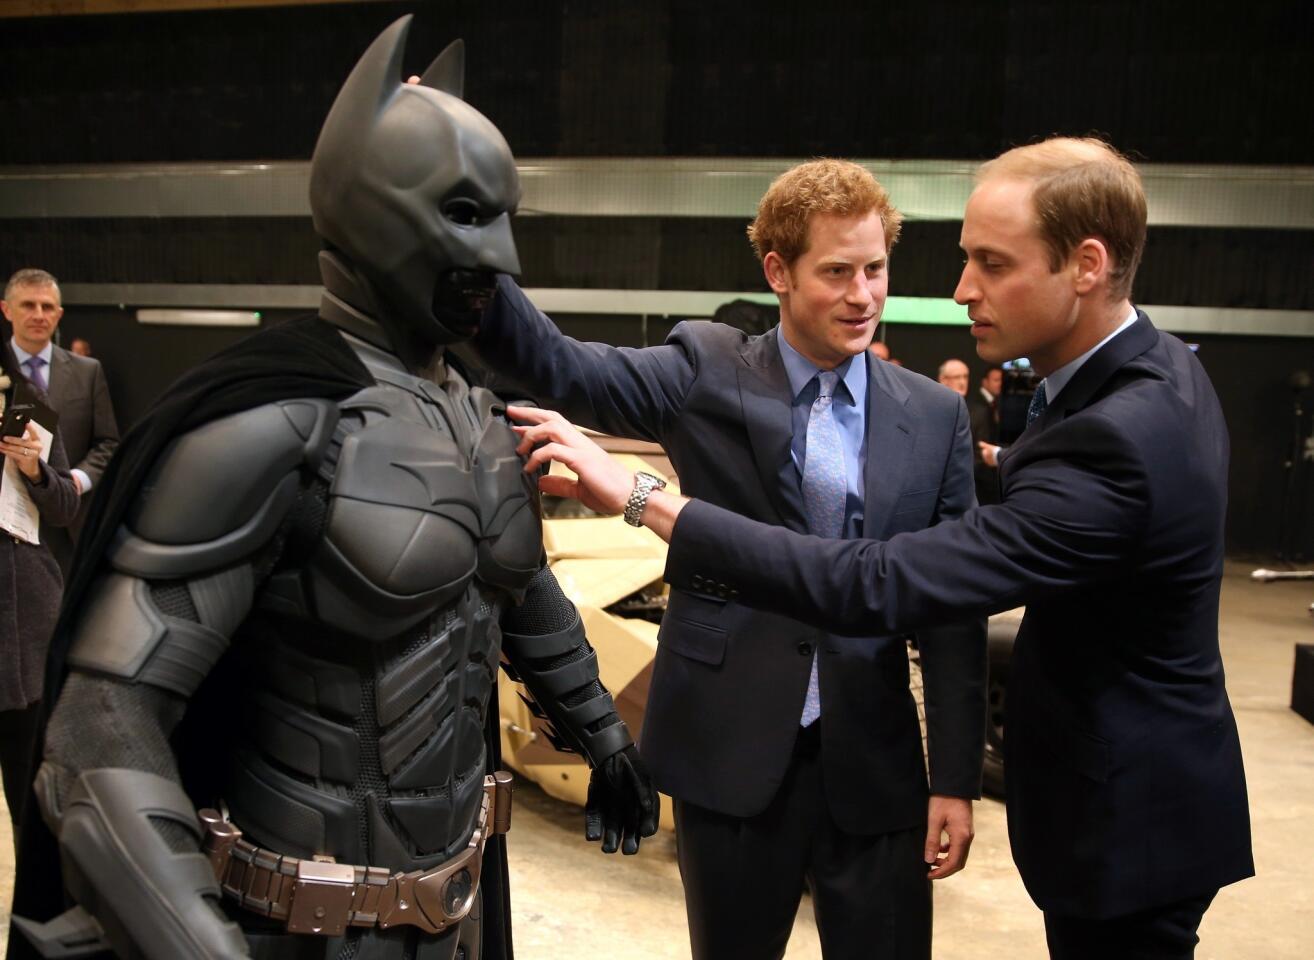 The royals visit Warner Bros. Studio Leavesden